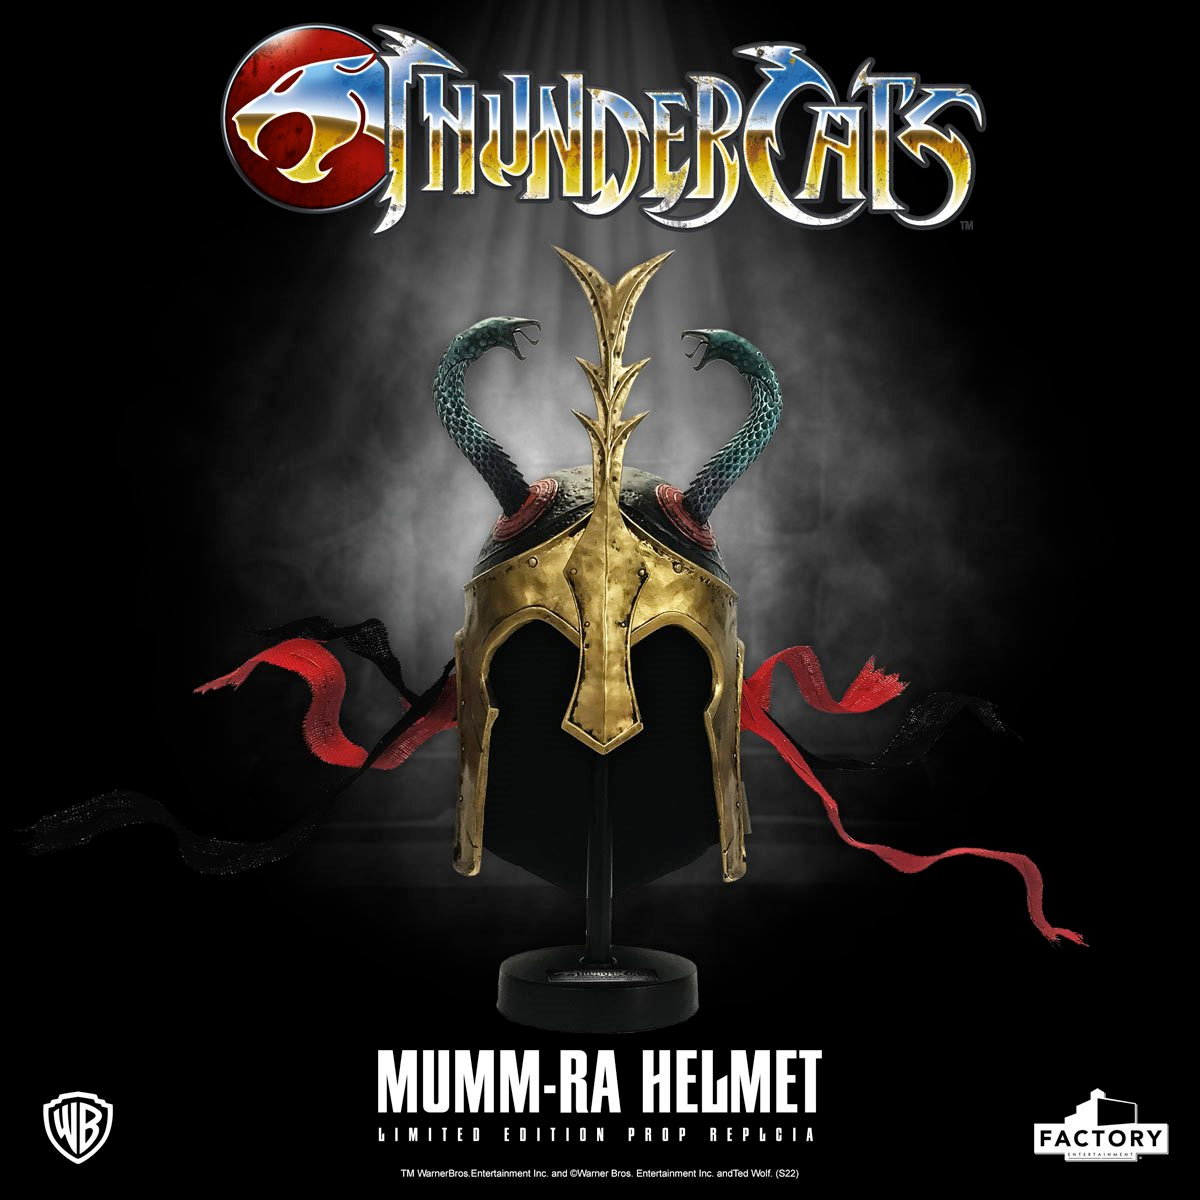 Mumm-Ra Thundercats Helmet Limited Edition Prop Replica